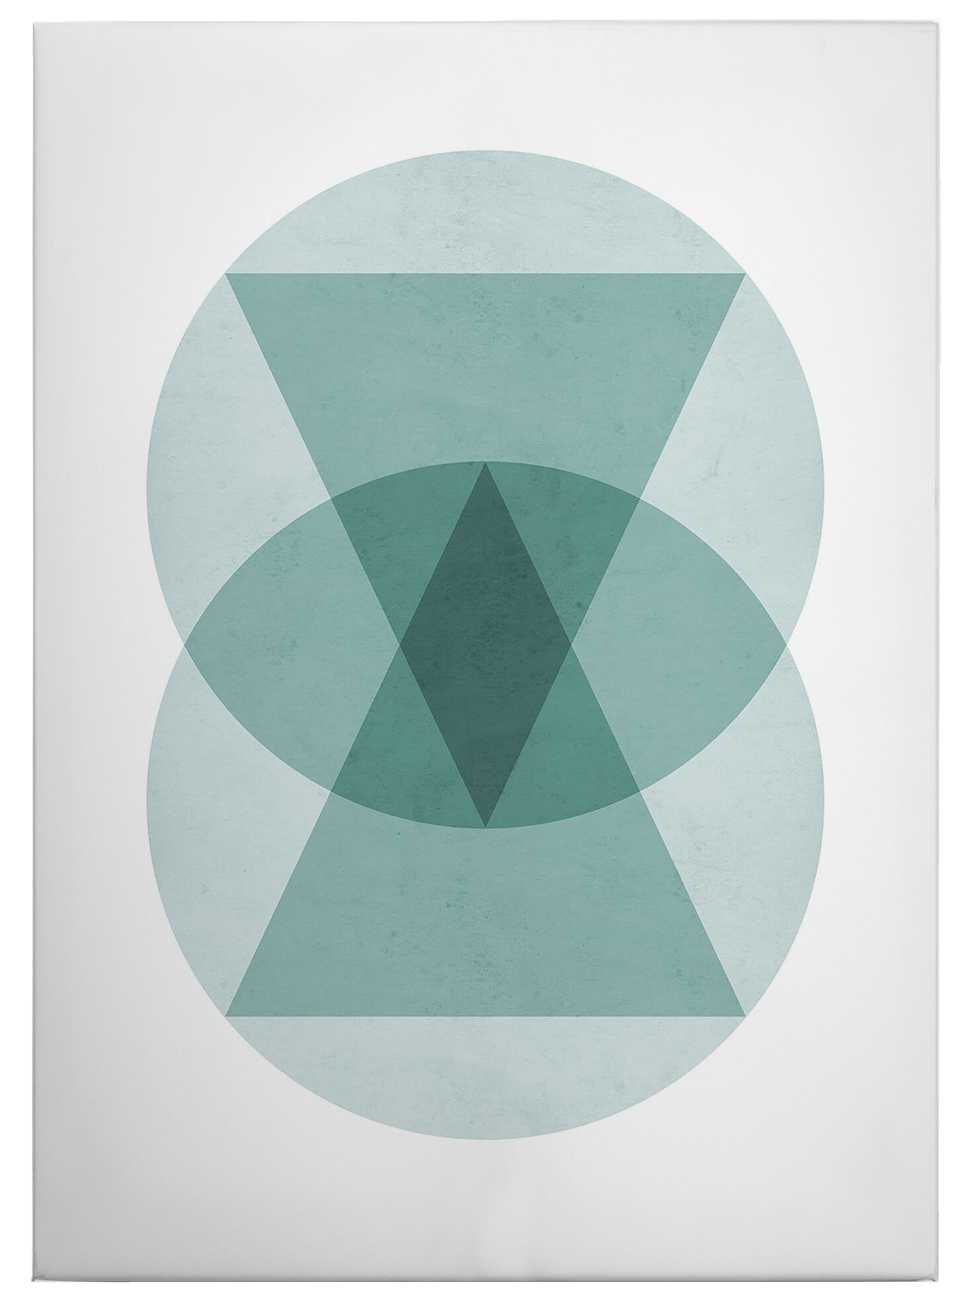             Canvas print geometric pattern circles triangles
        